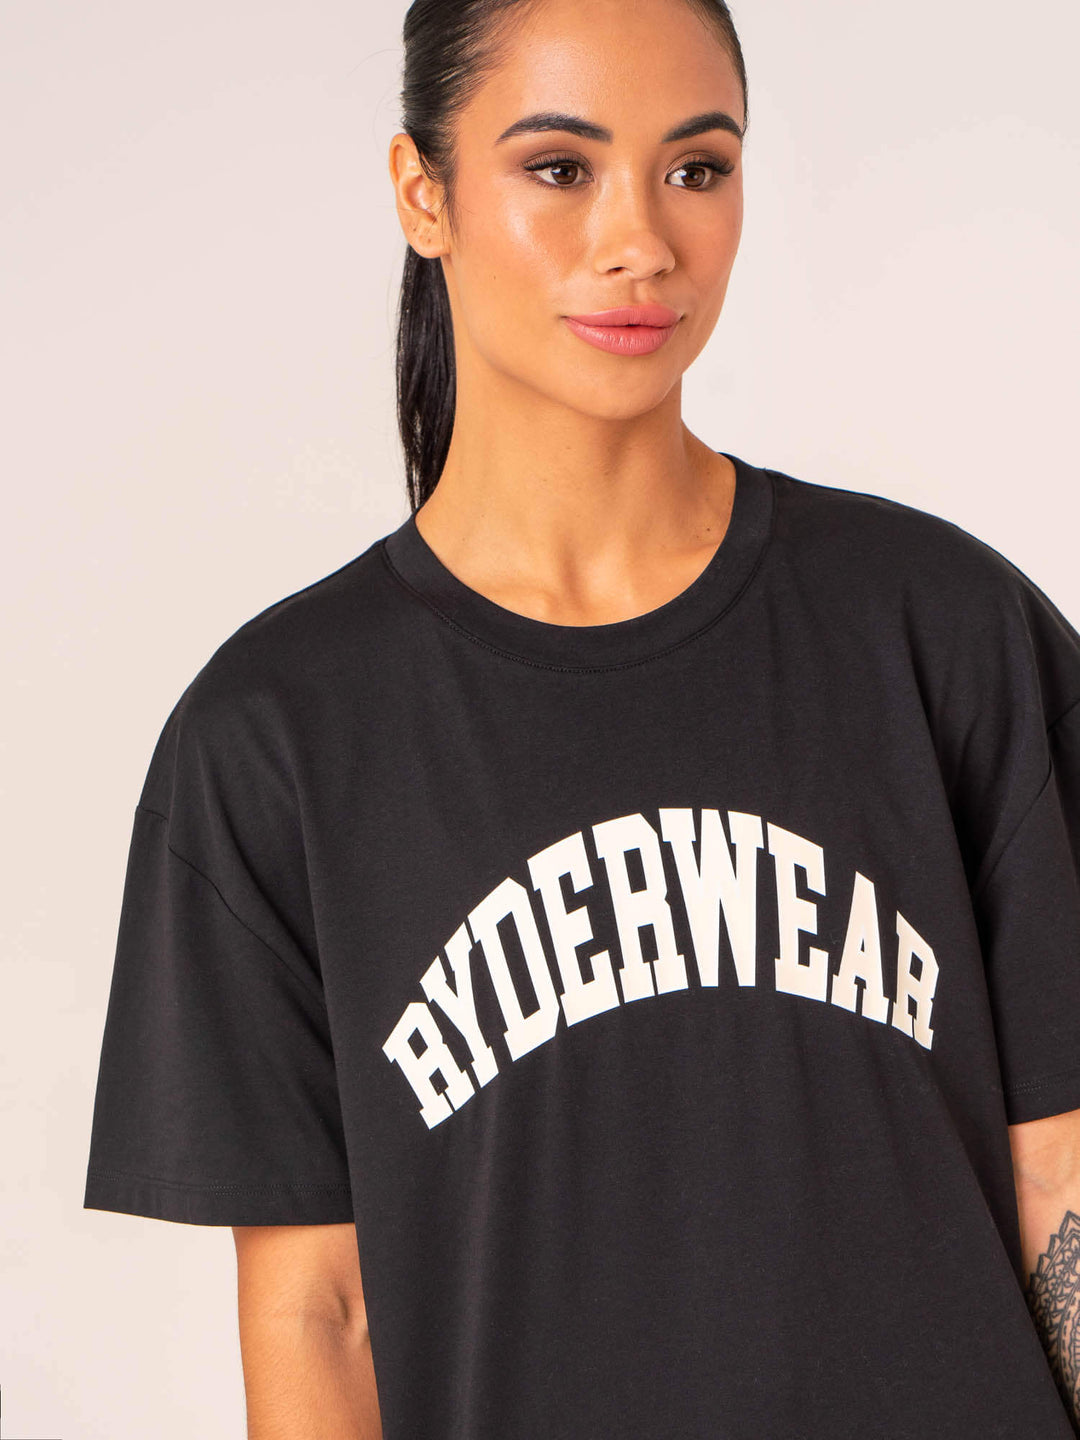 Women's Collegiate T-Shirt - Black Clothing Ryderwear 